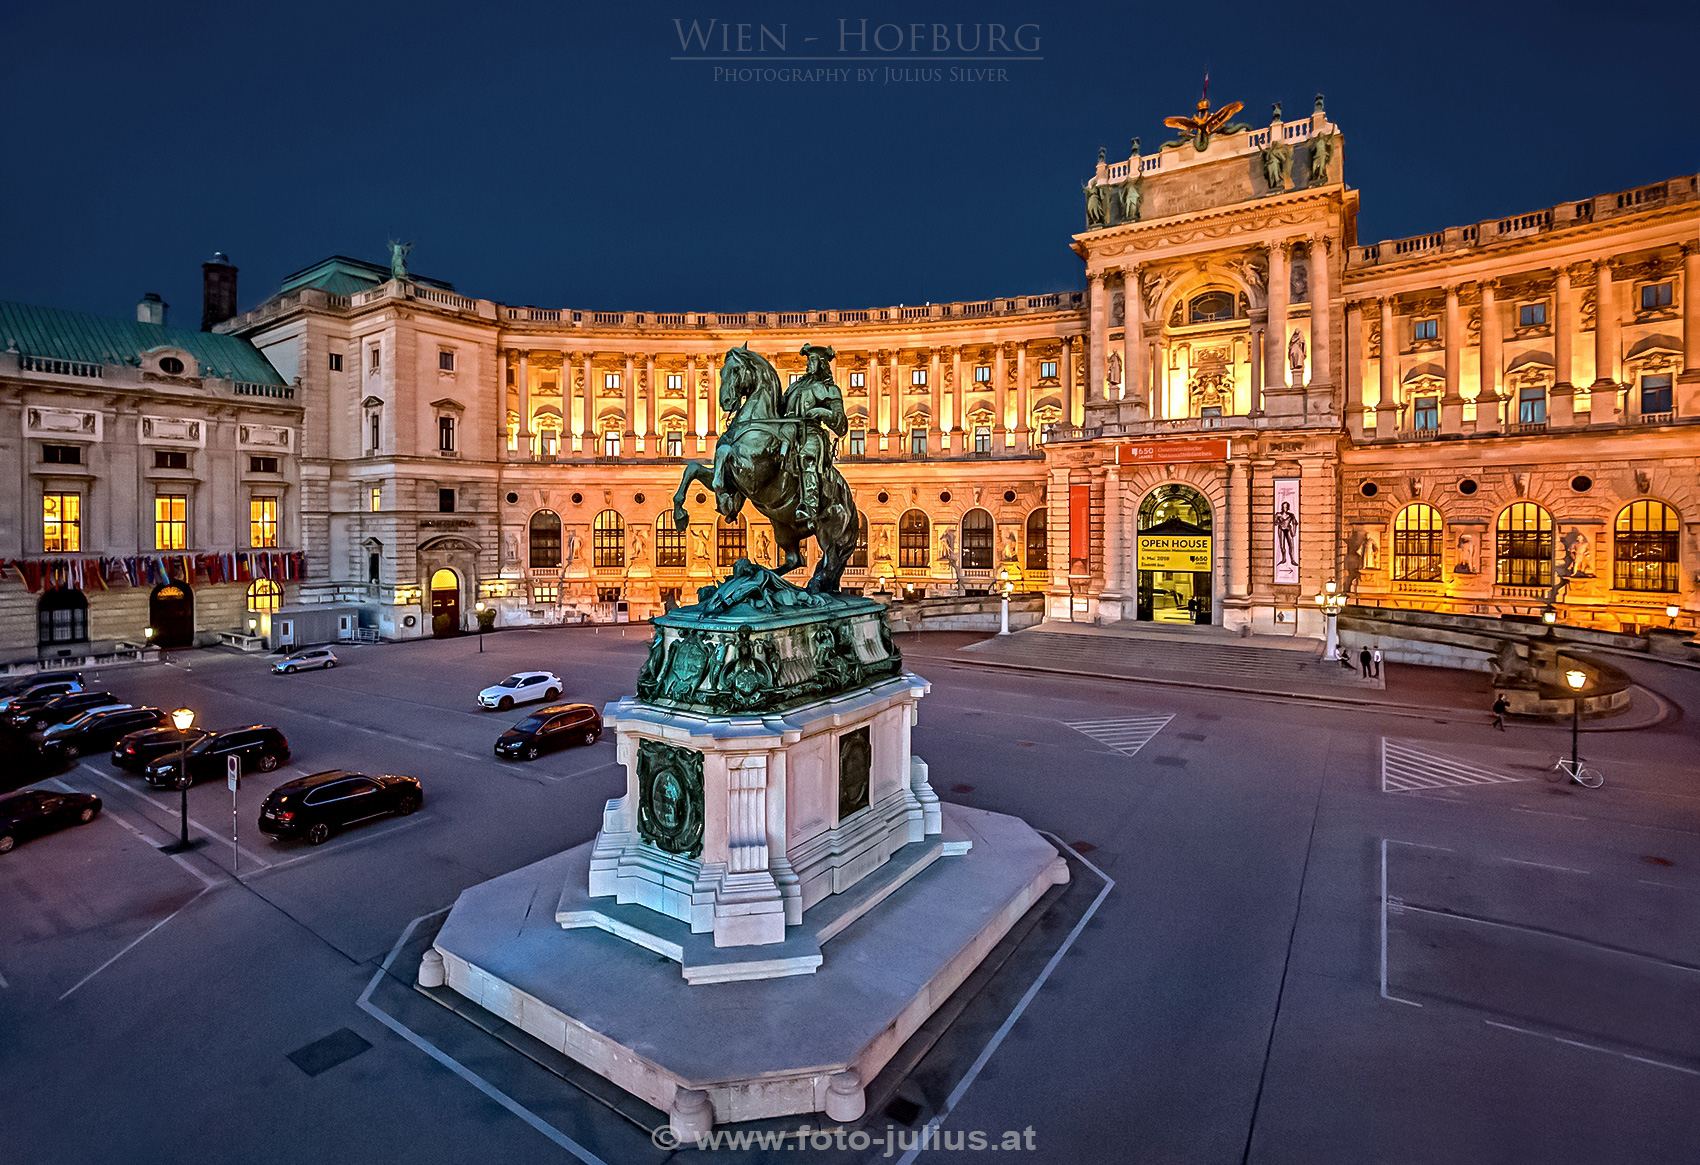 W6751a_Hofburg_Wien.jpg, 920kB